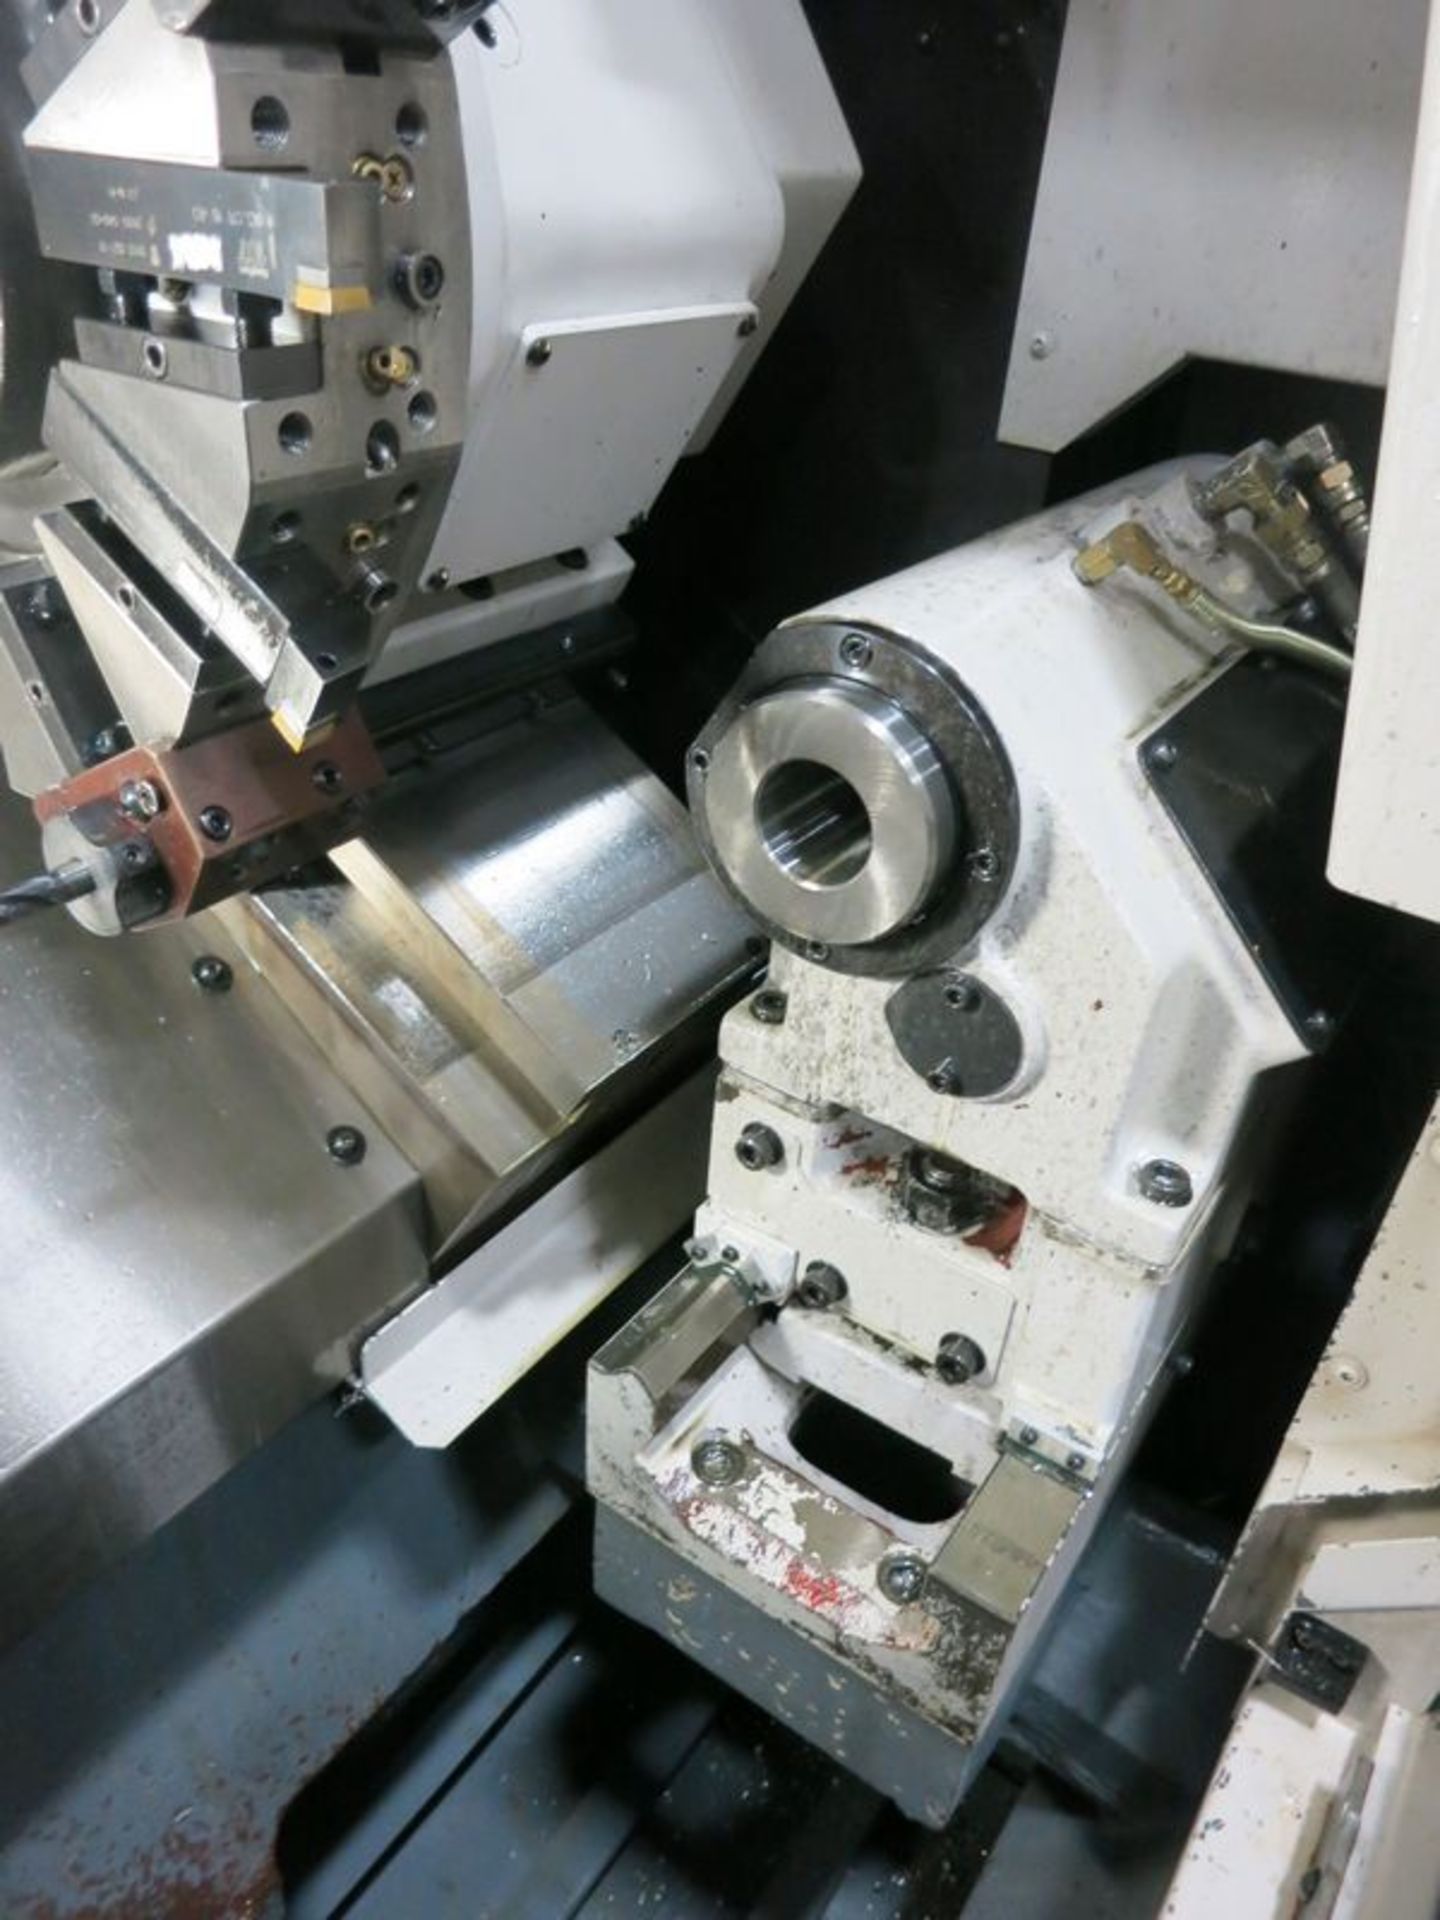 Okuma Genos L250E 2-Axis CNC Turning Center lathe, S/N C3115, New 2011 - Image 6 of 10